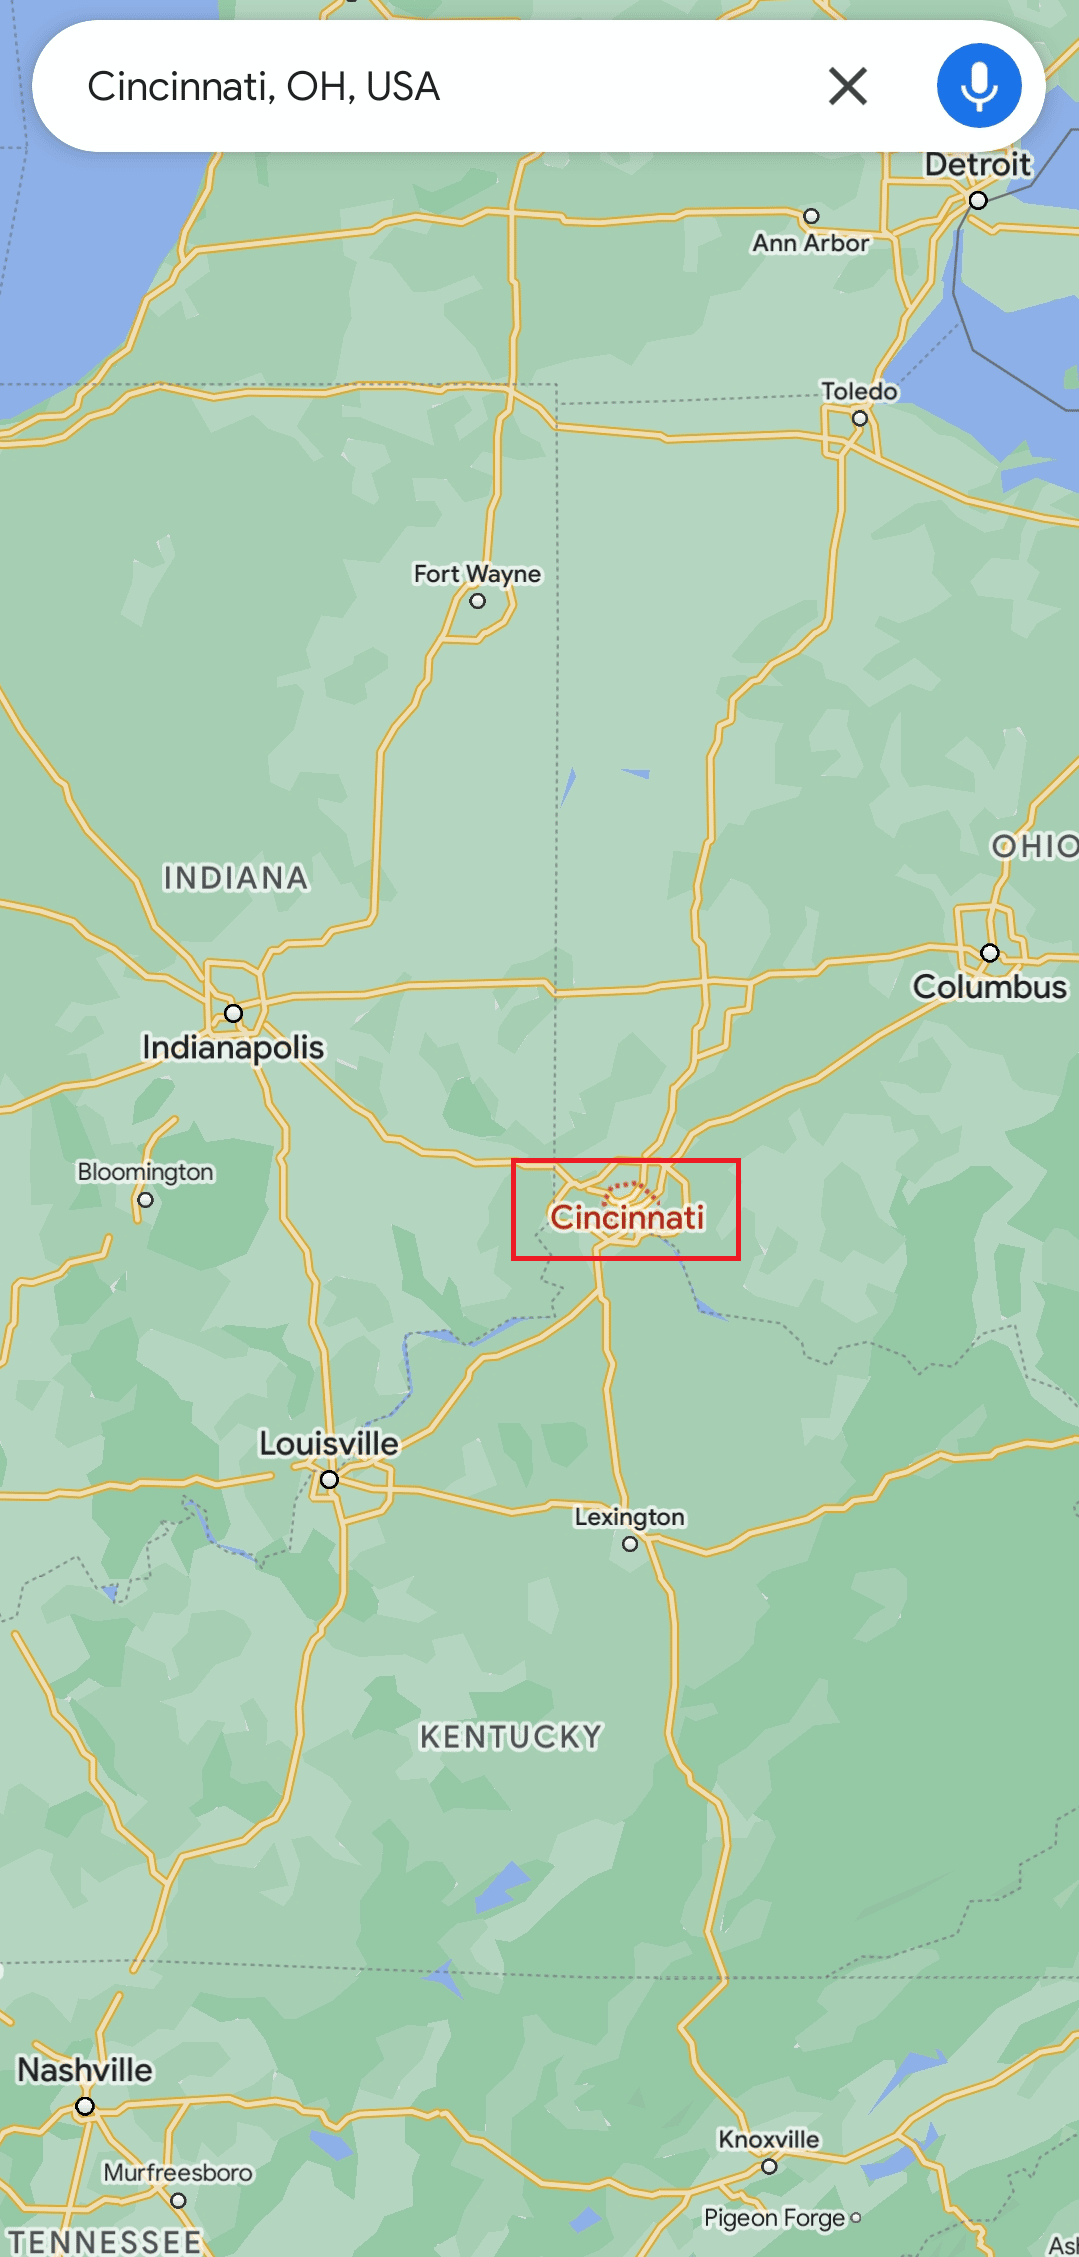 Find Cincinnati on the map | halfway between two places